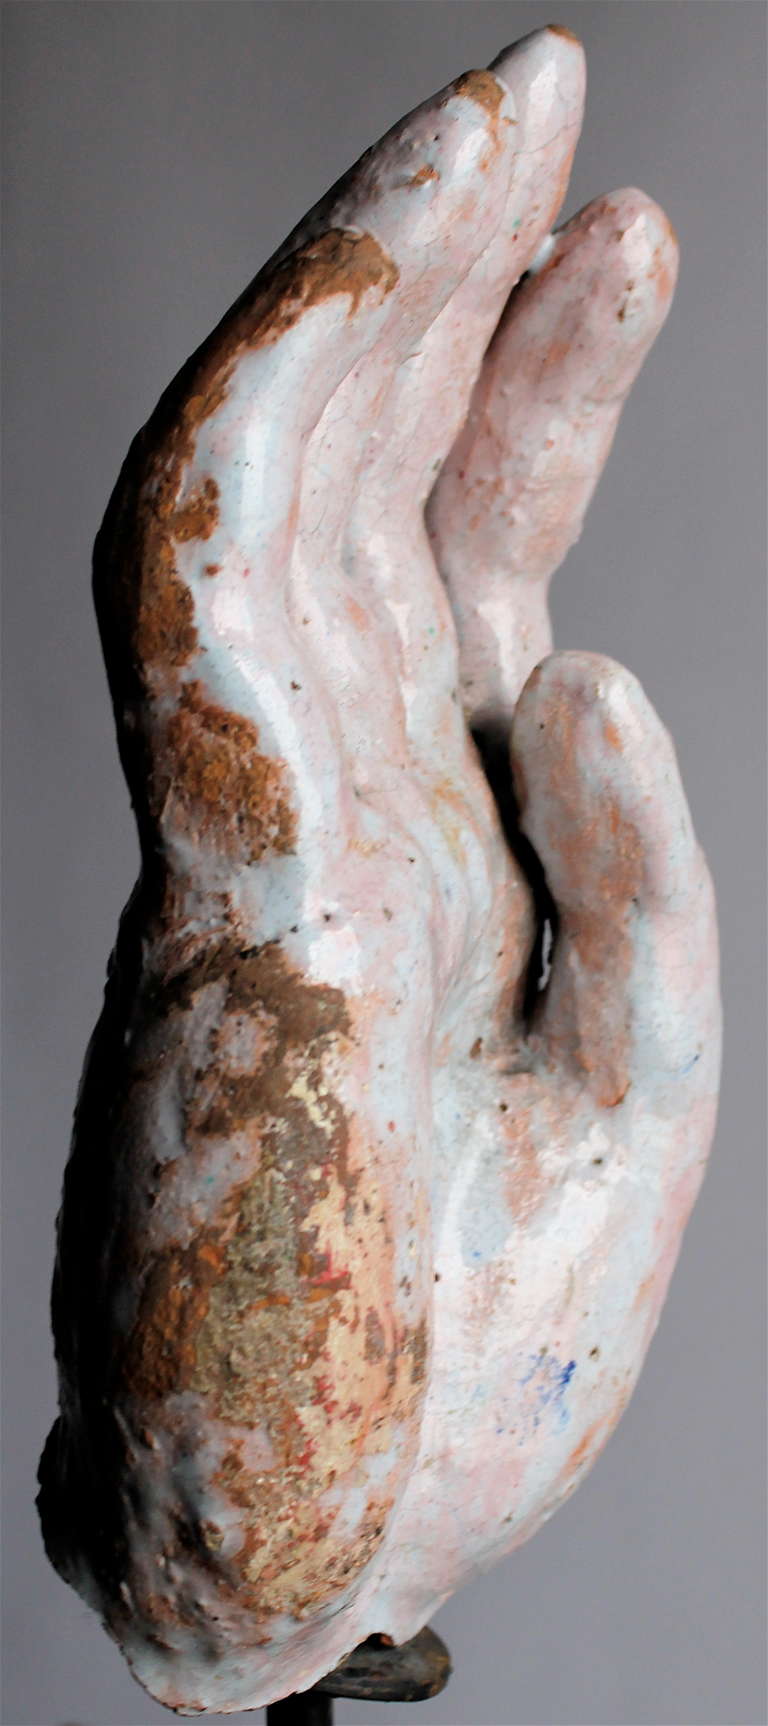 Austrian Vally Wieselthier Ceramic Hand Fragment from the Wiener Werkstatte showroom NYC